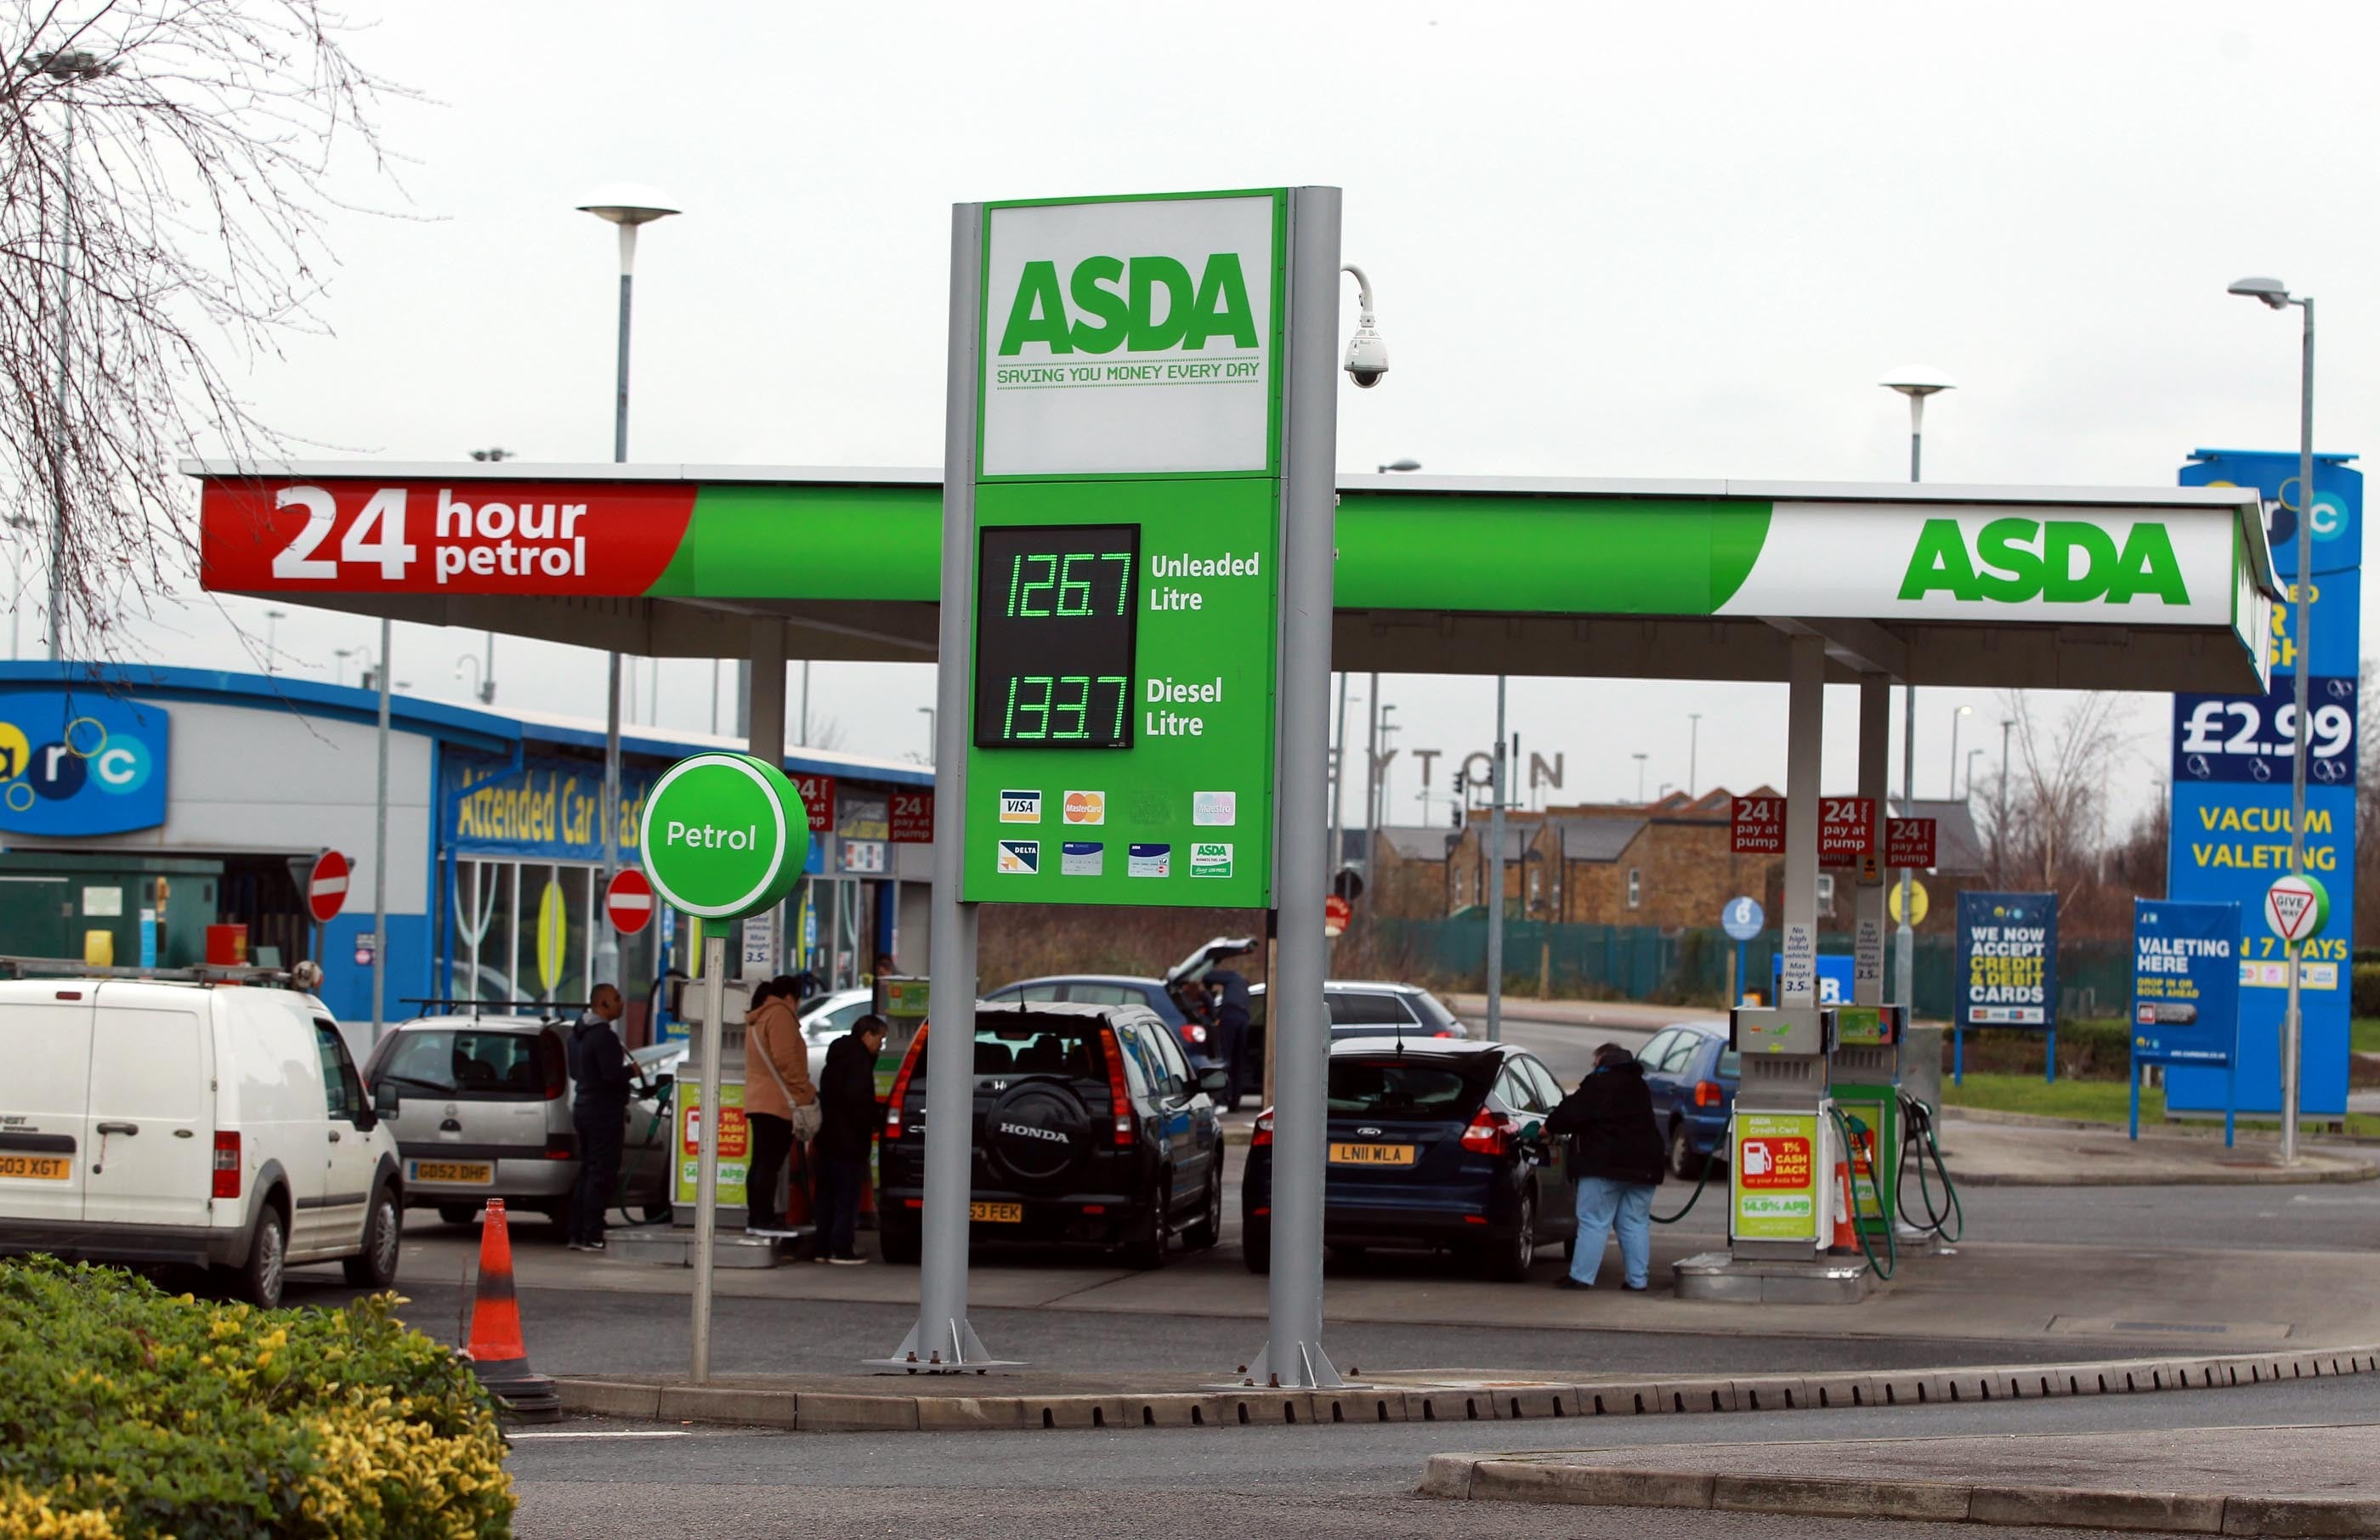 Petrol station at the Asda store in Leyton, east London (Sean Dempsey/PA)